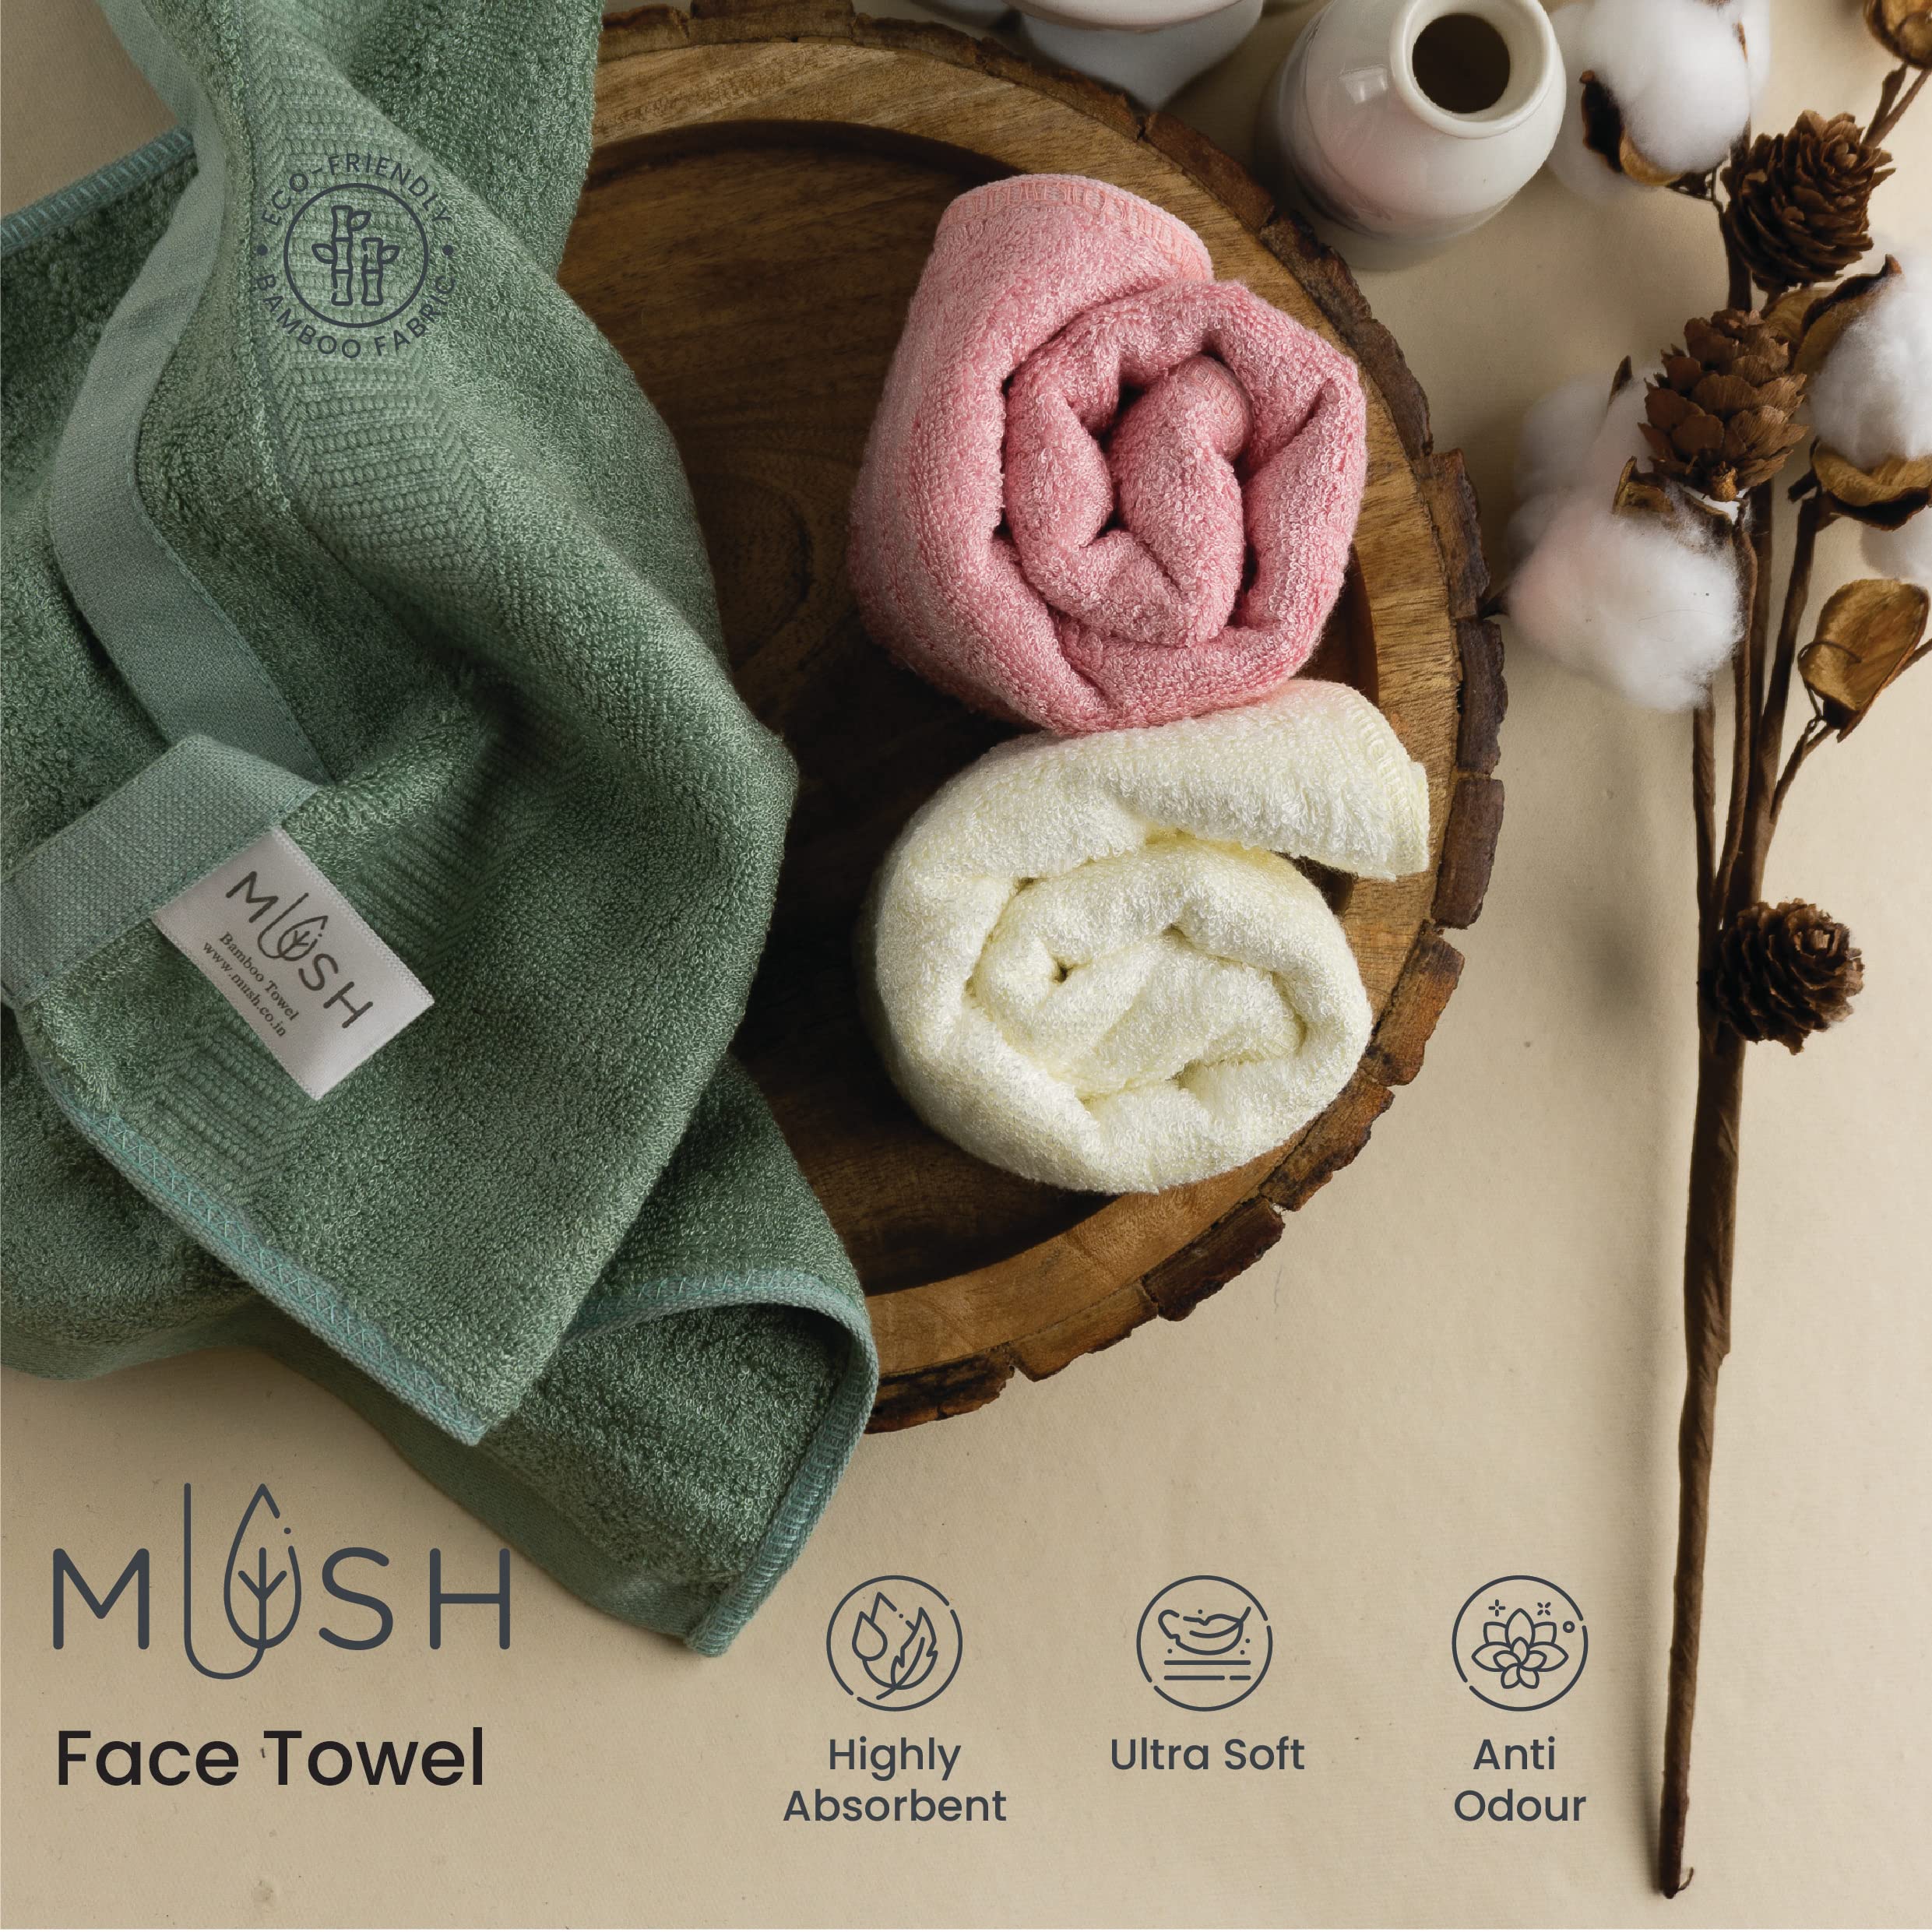 Face Towel